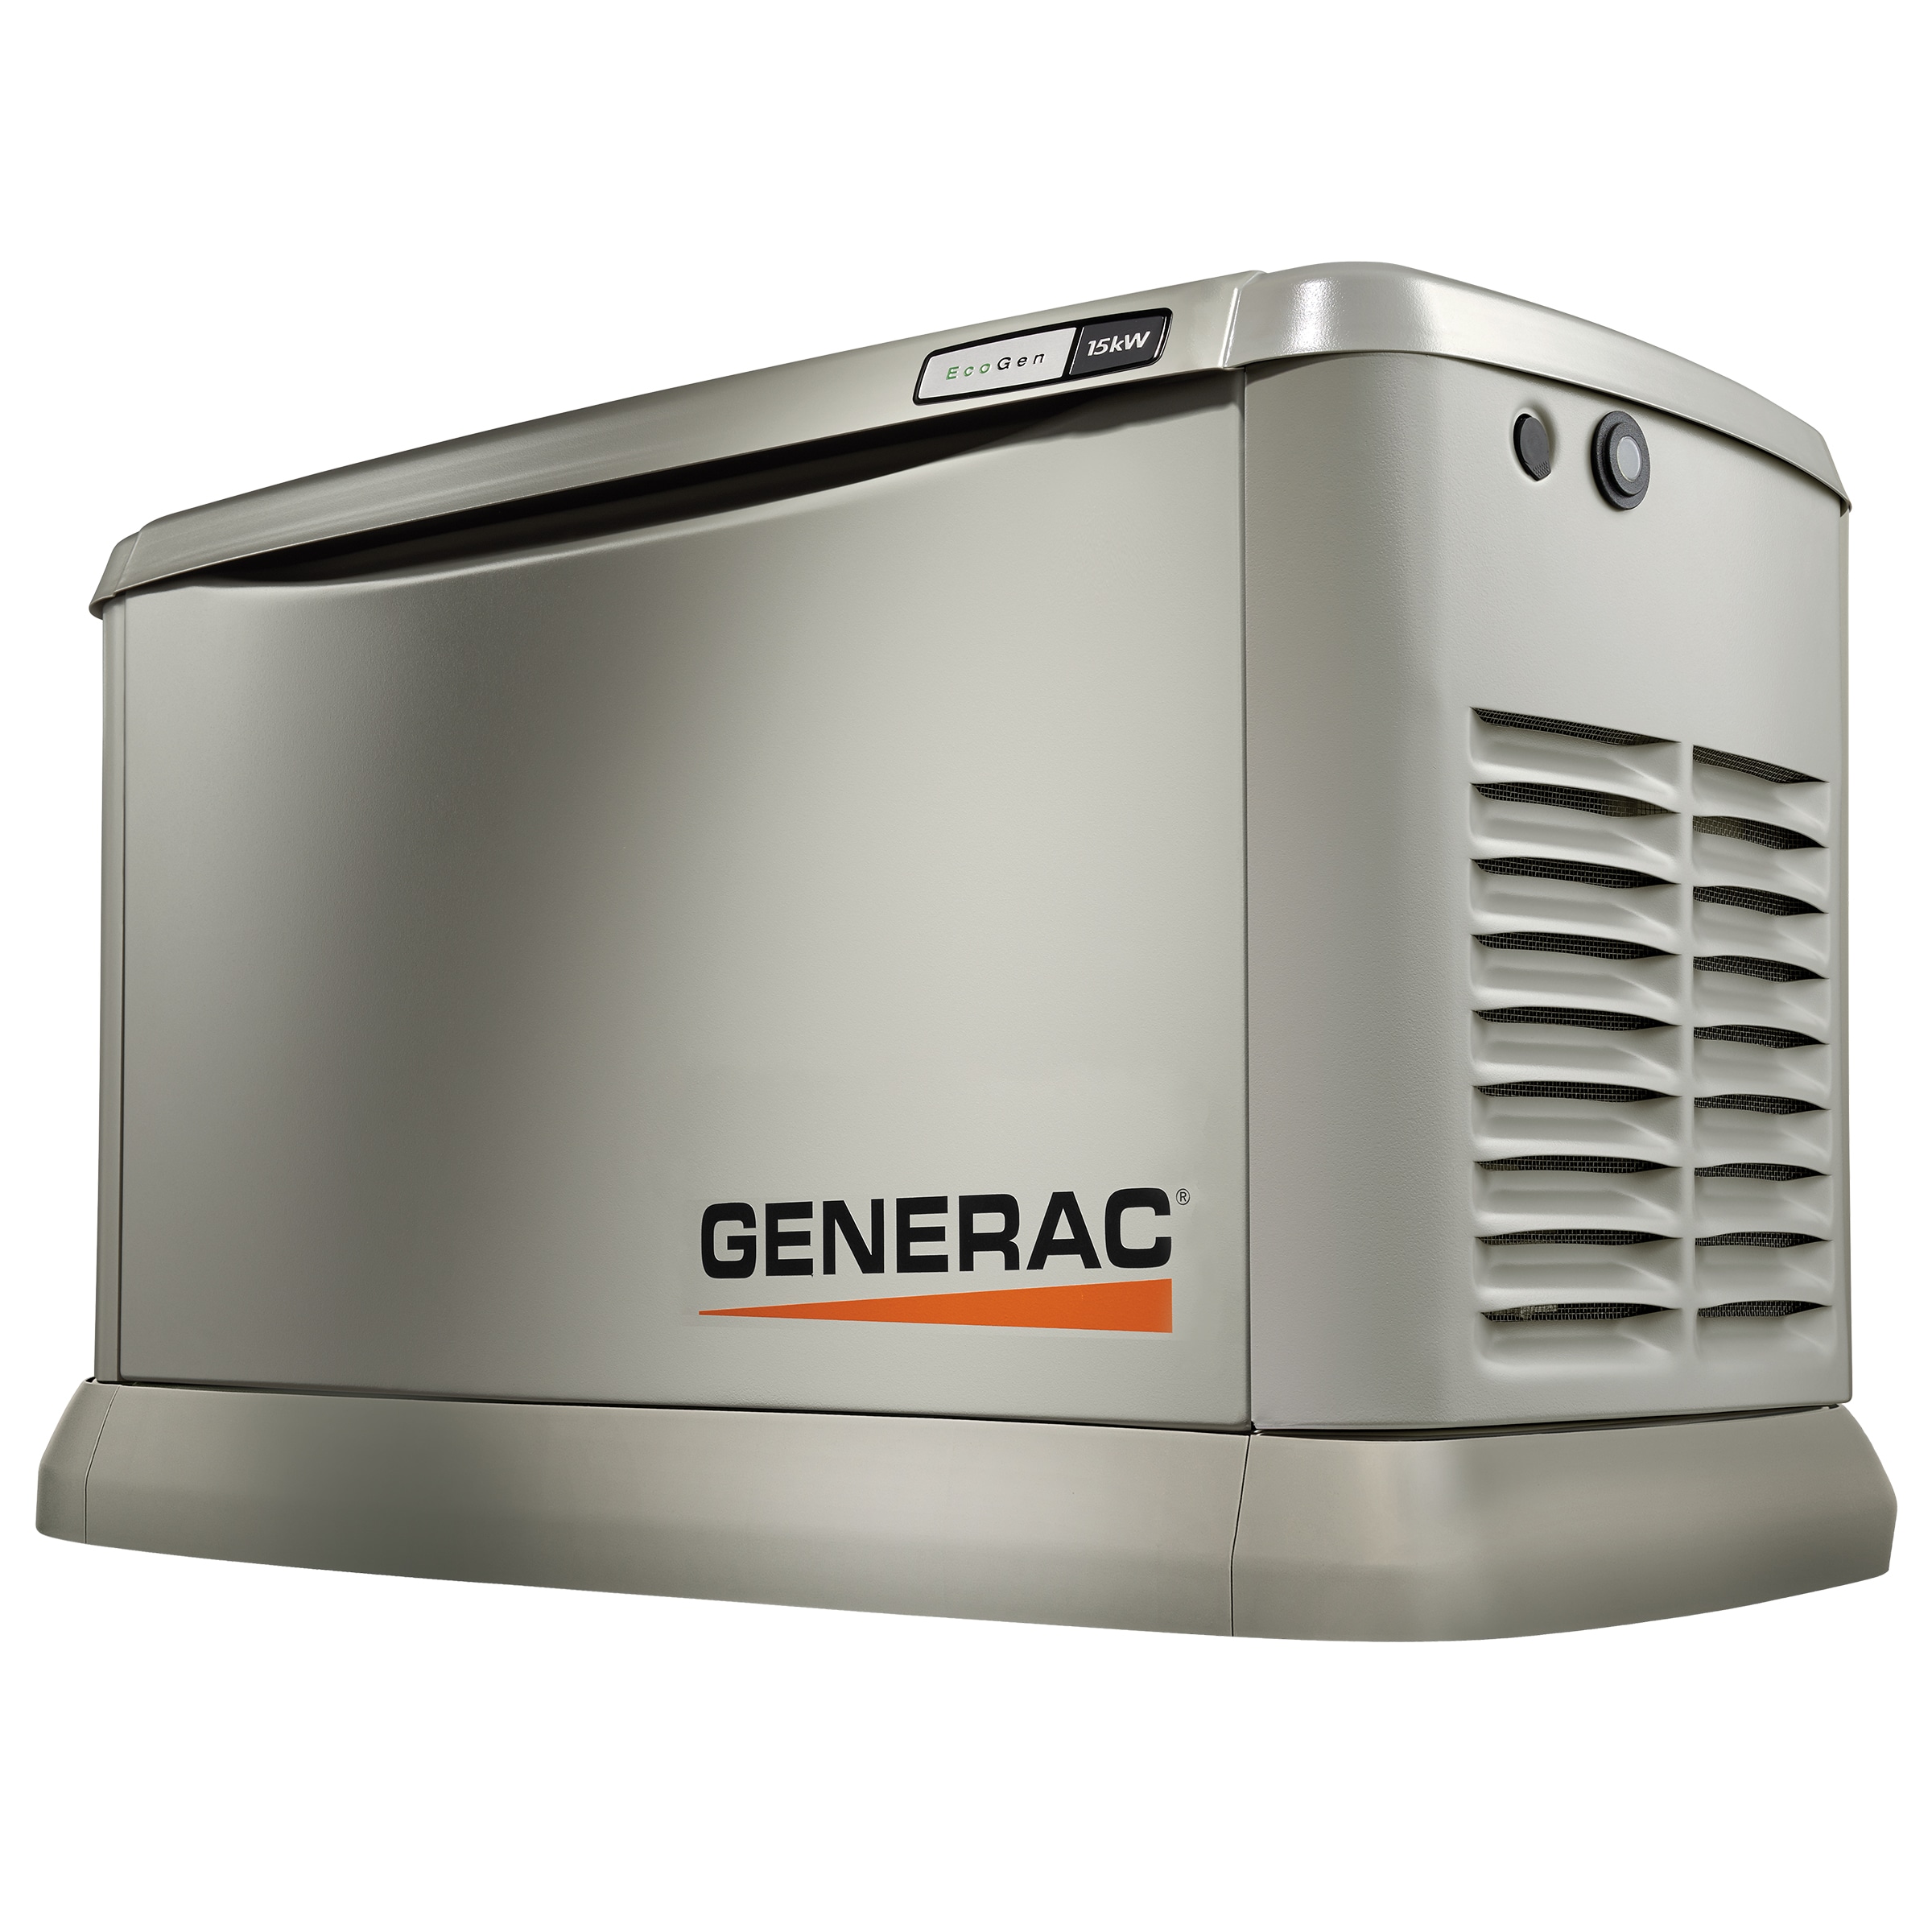 Generac Ecogen 15kw Air Cooled Standby